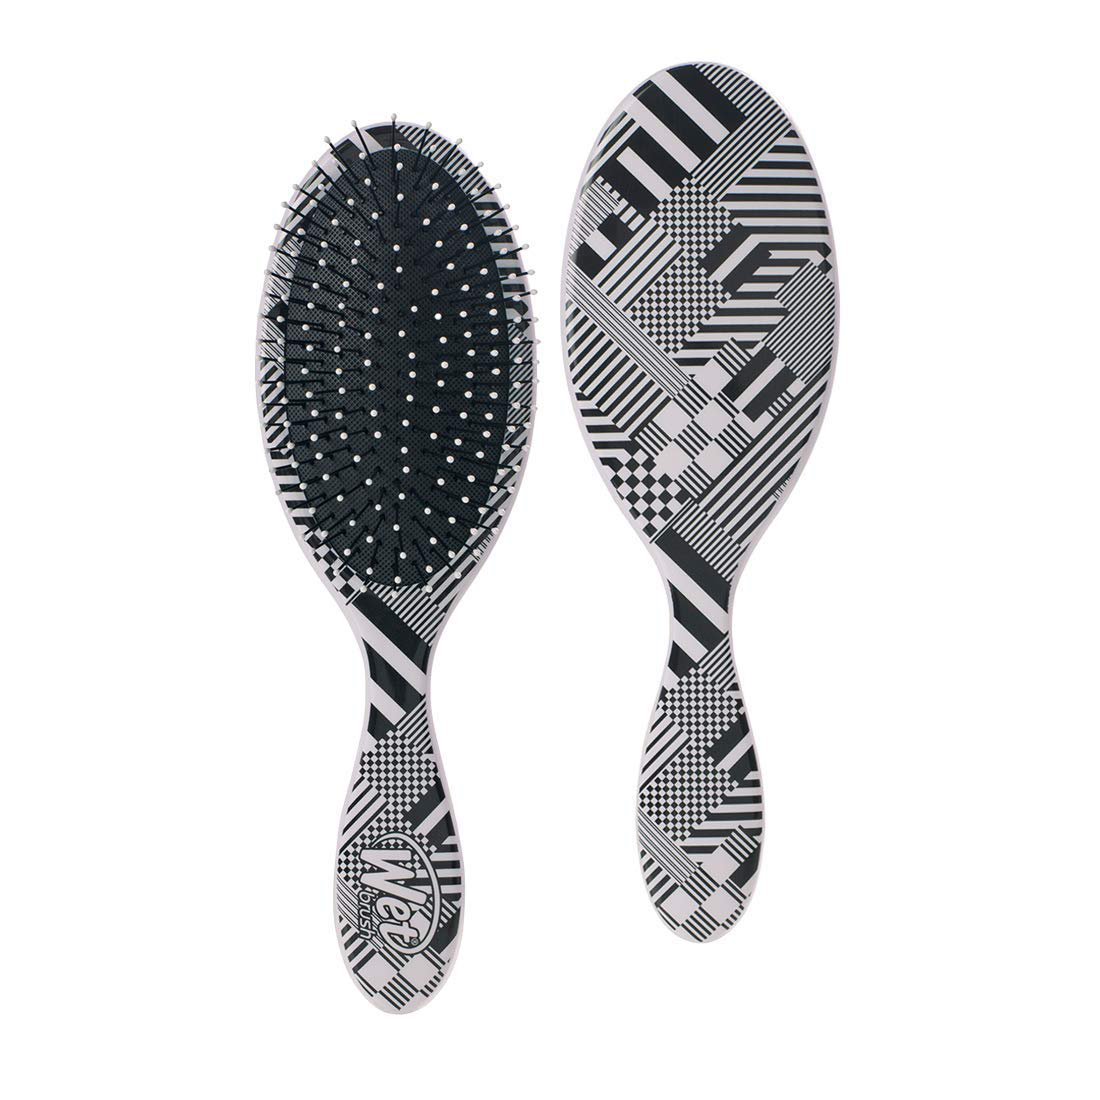 Wet Brush Original Detangler Exclusive Ultra-soft IntelliFlex Bristles - Glide Through Tangles With Ease For All Hair Types